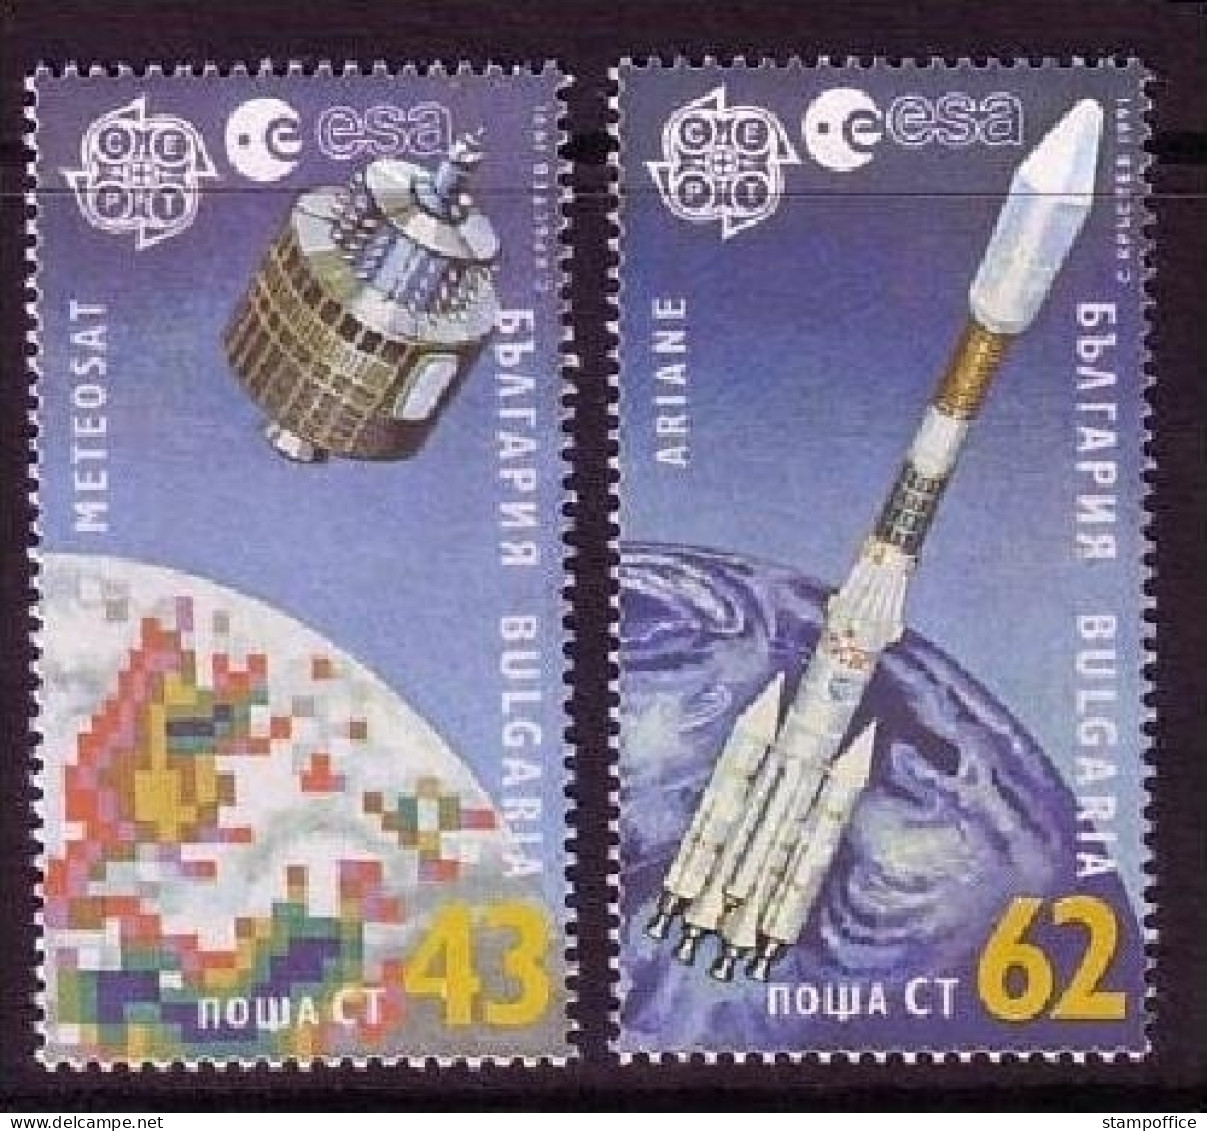 BULGARIEN MI-NR. 3901-3902 POSTFRISCH(MINT) EUROPA 1991 EUROPÄISCHE WELTRAUMFAHRT - 1991